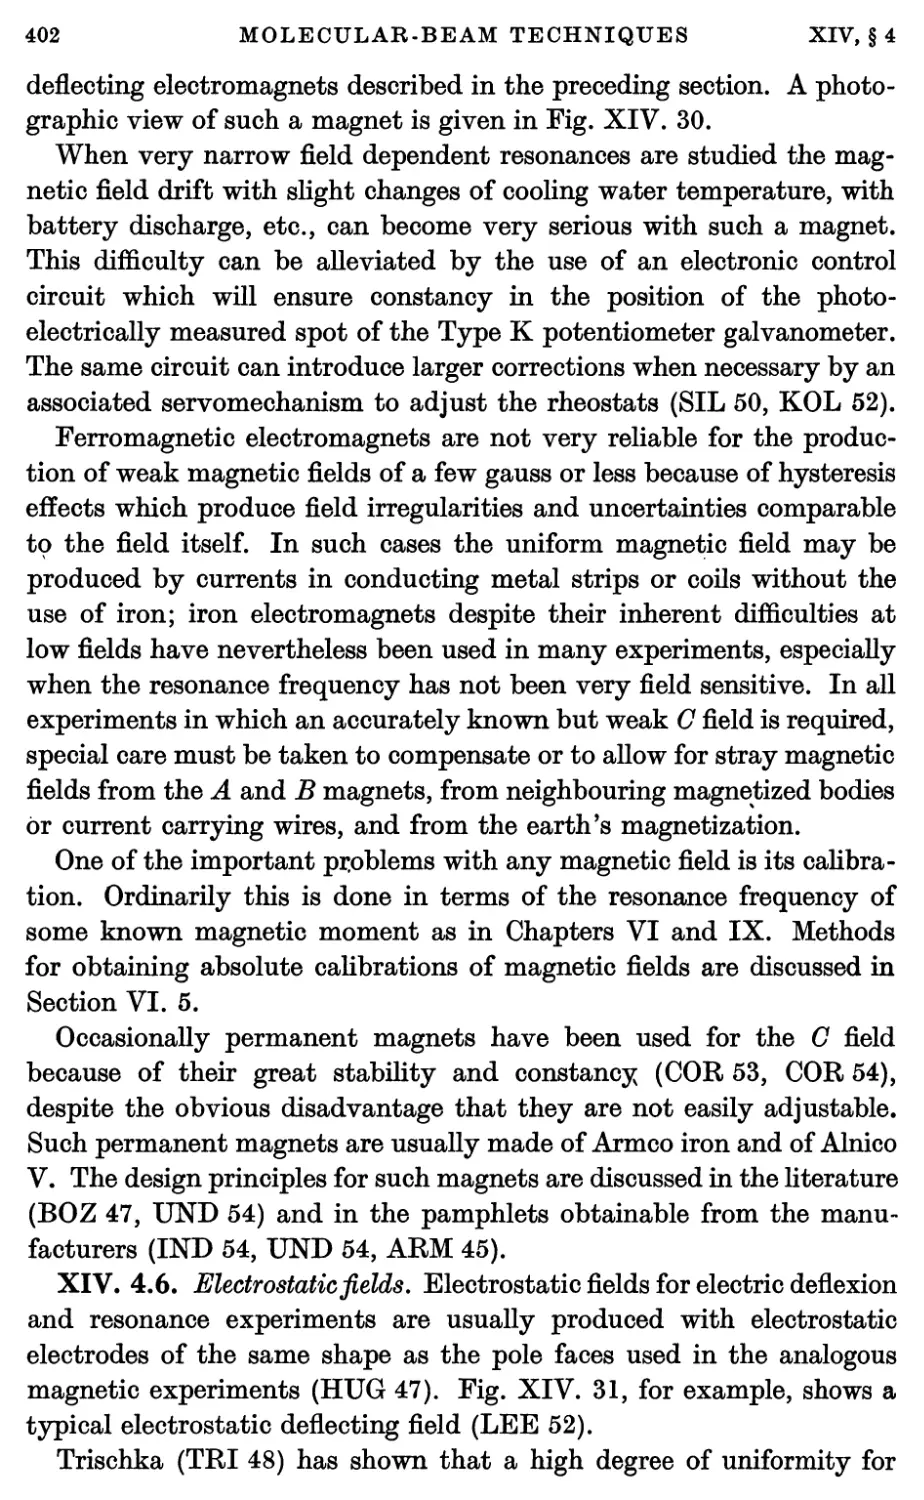 XIV.4.6. Electrostatic fields